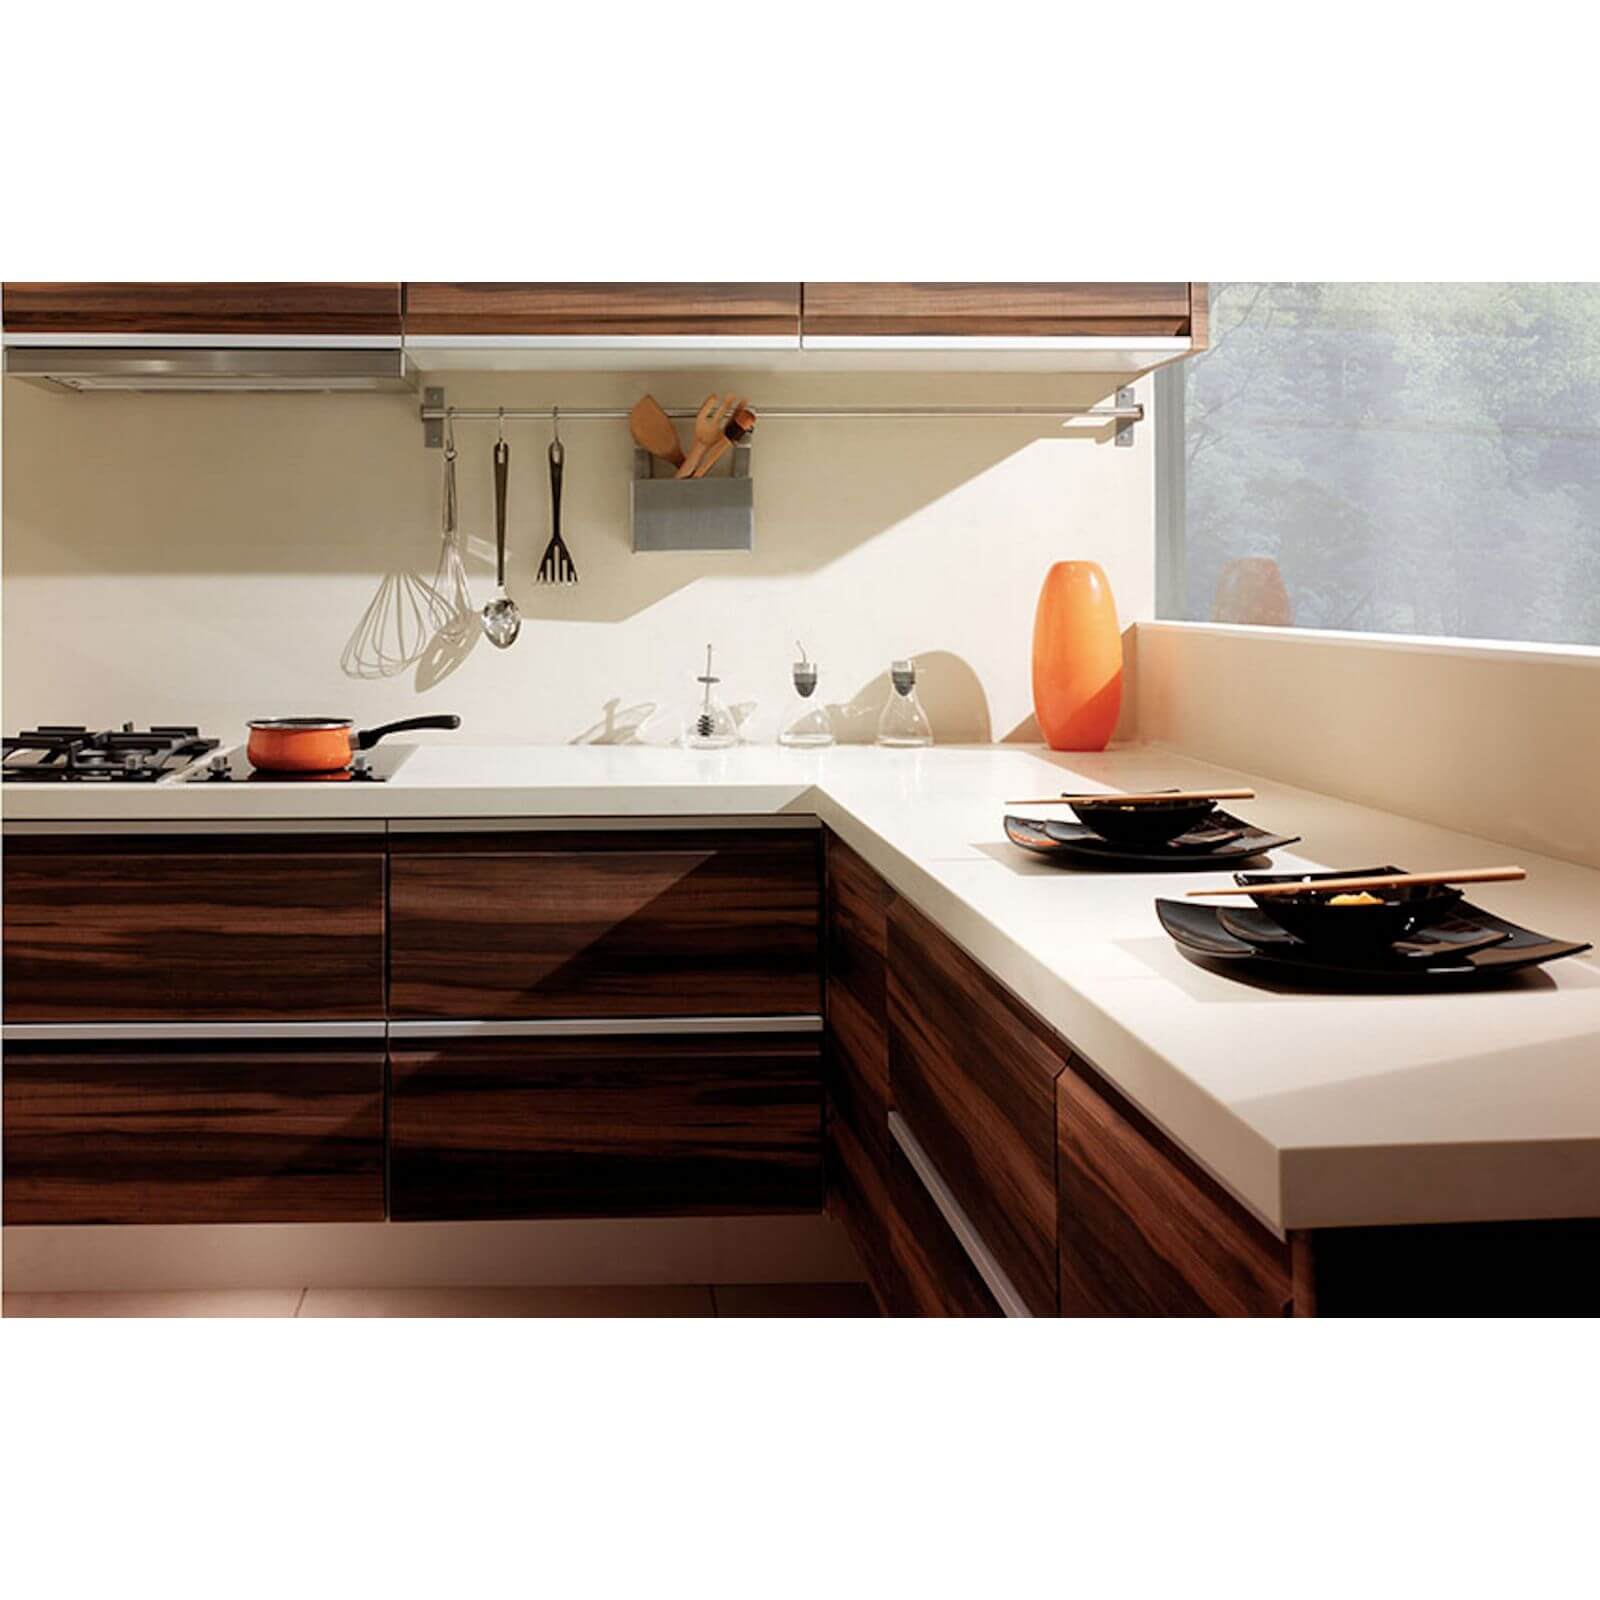 Maia Iceberg Kitchen Sink Worktop - Universal Super Large Bowl - 3600 x 650 x 42mm